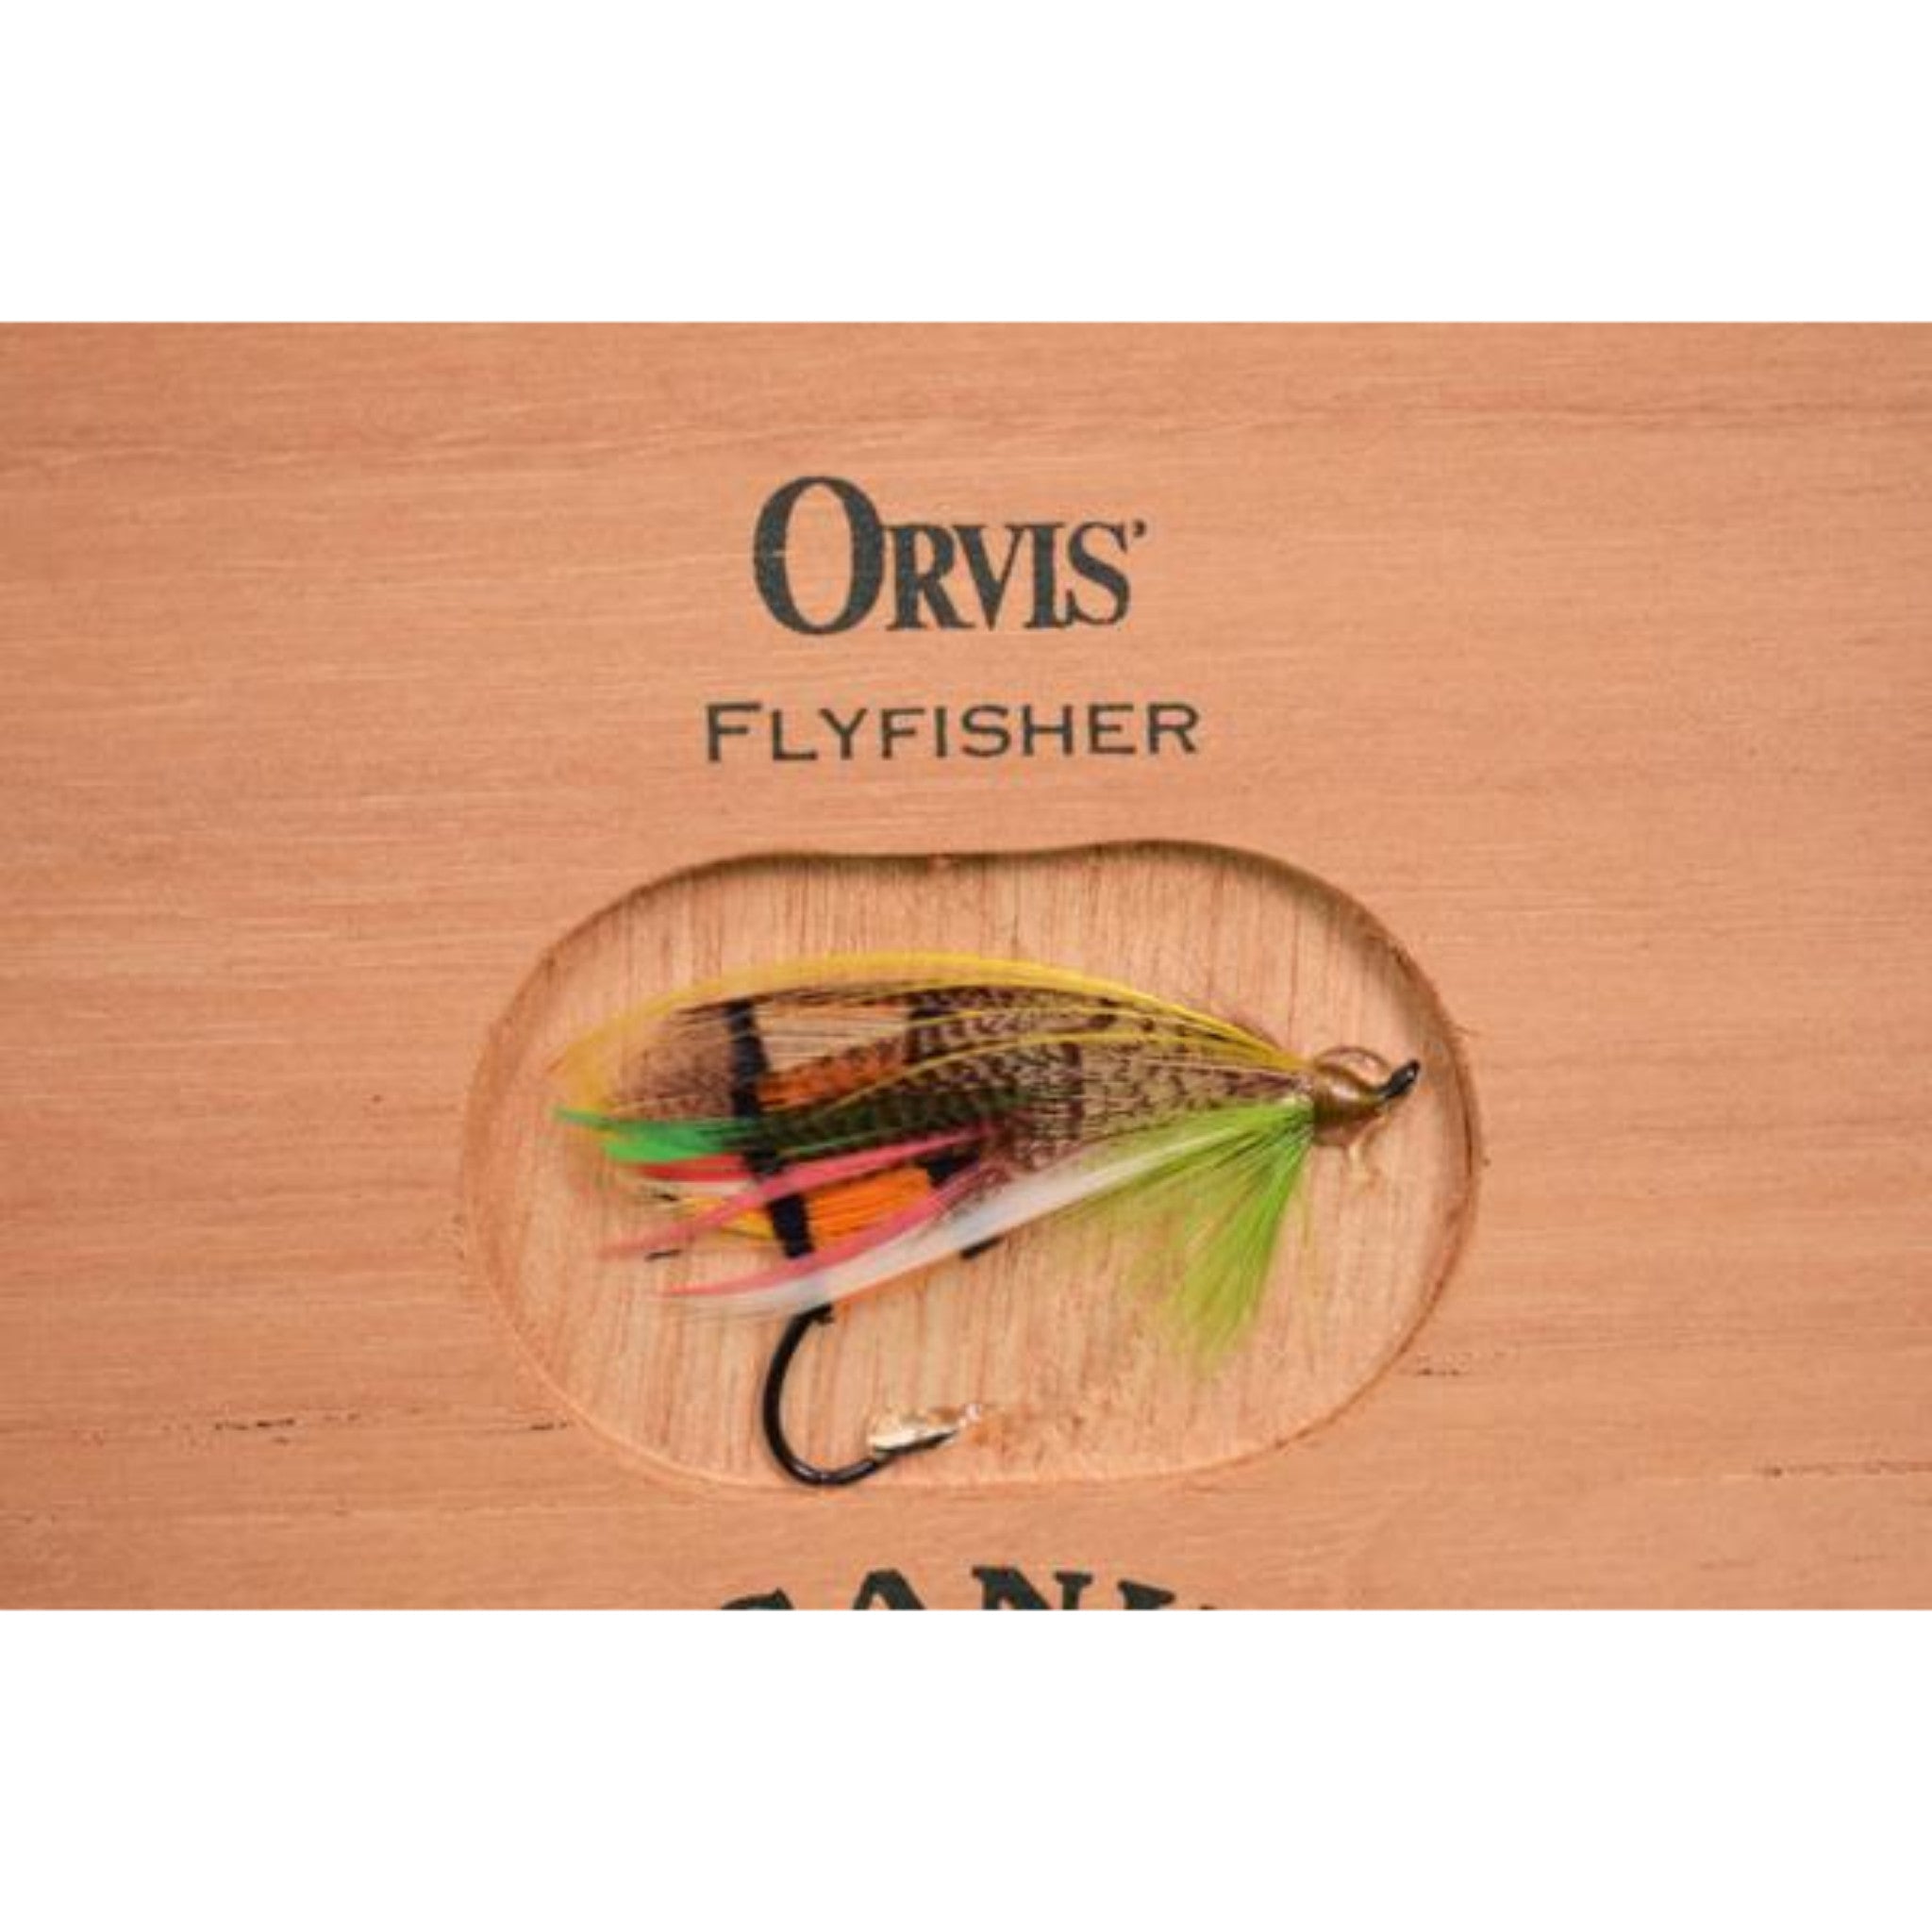 Orvis Flyfisher Macanudo 25 DR Cigar Box